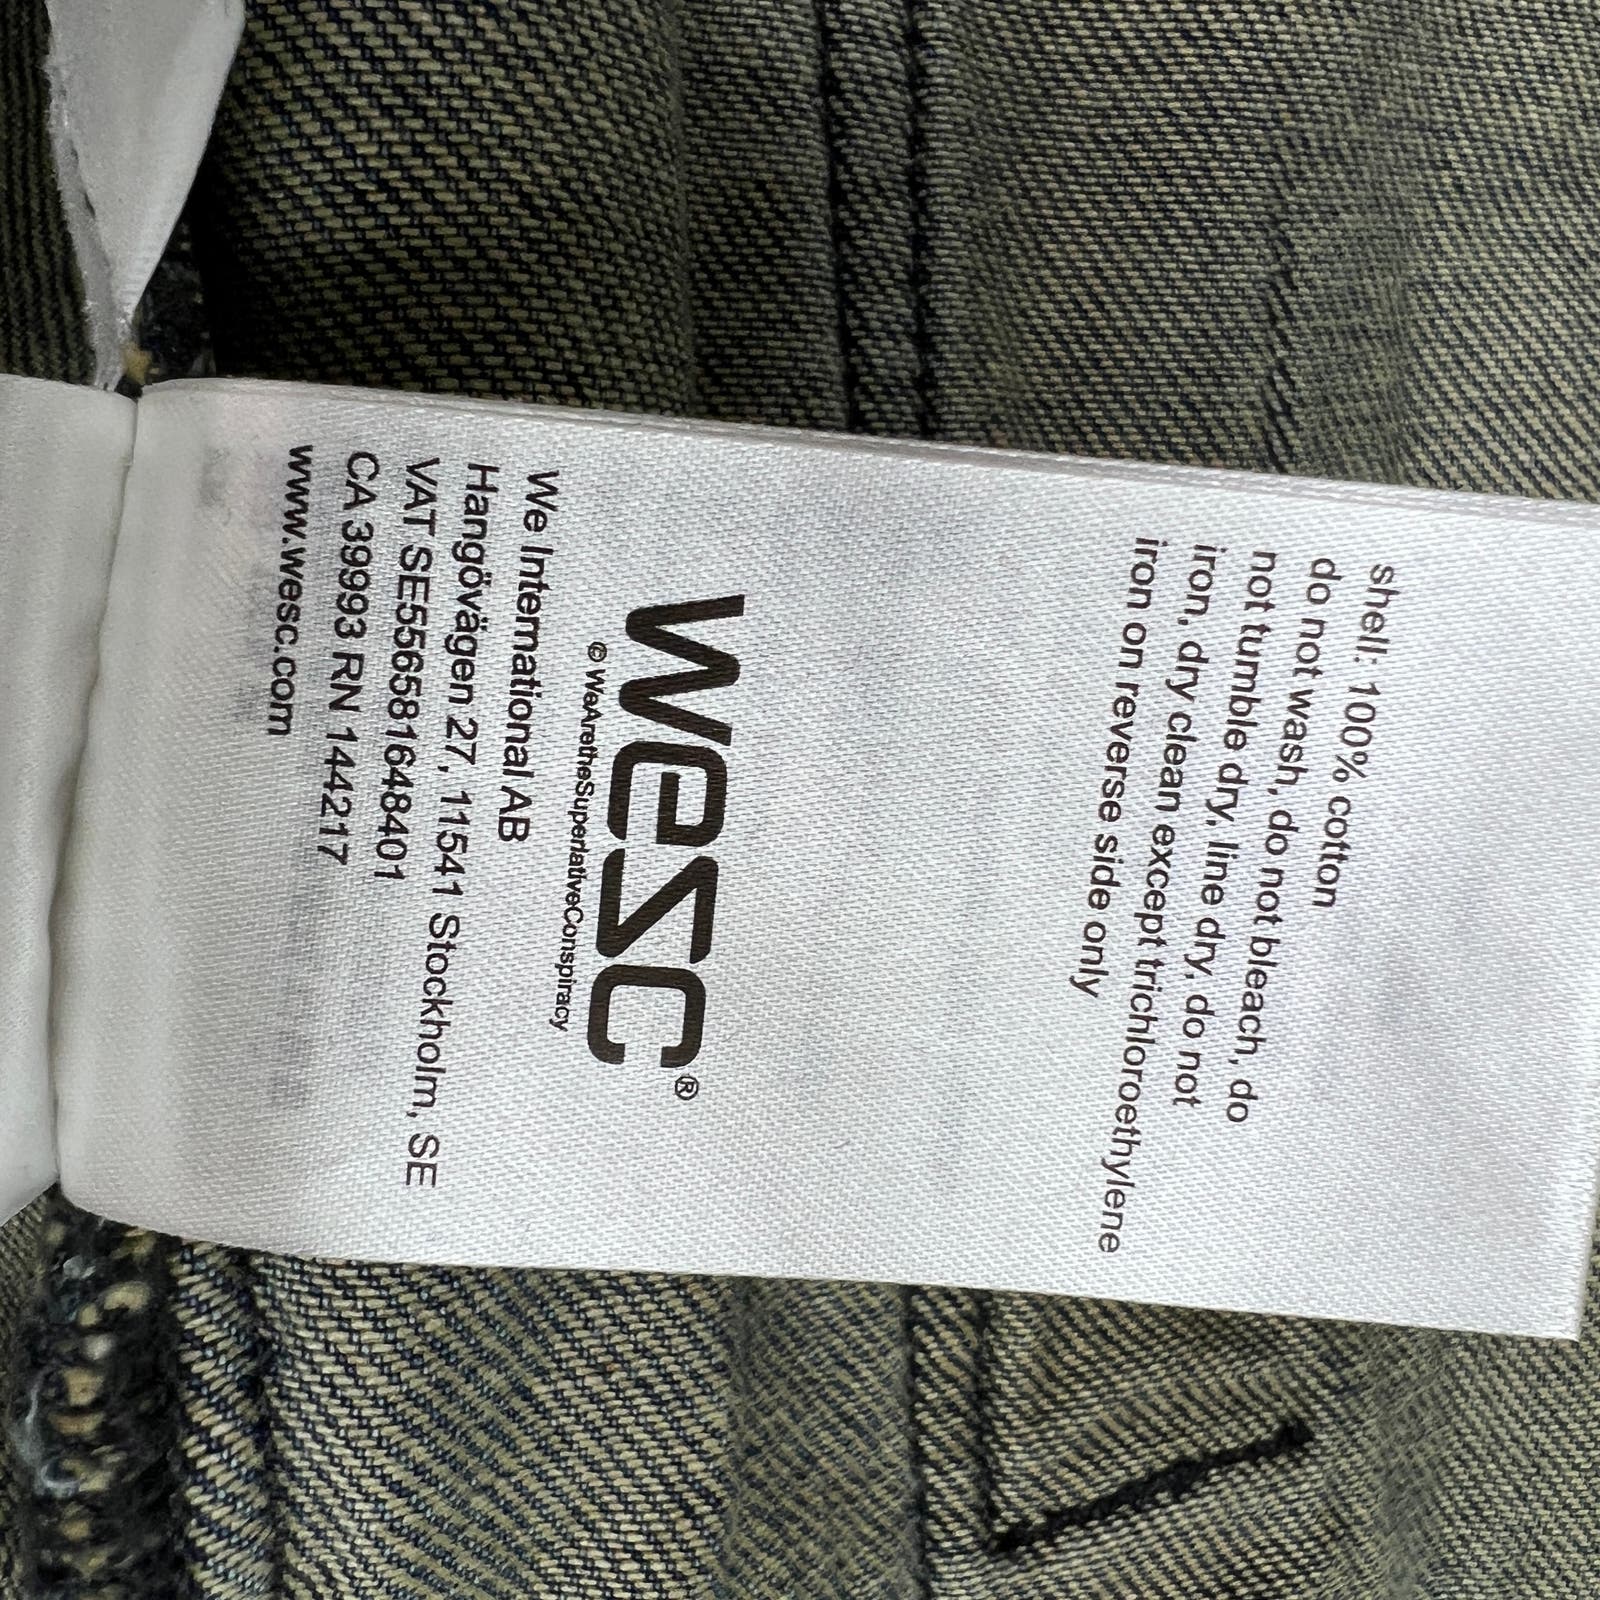 WeSC Unisex Jacket US M Men / US L Women White Paint Splatter Blue Denim